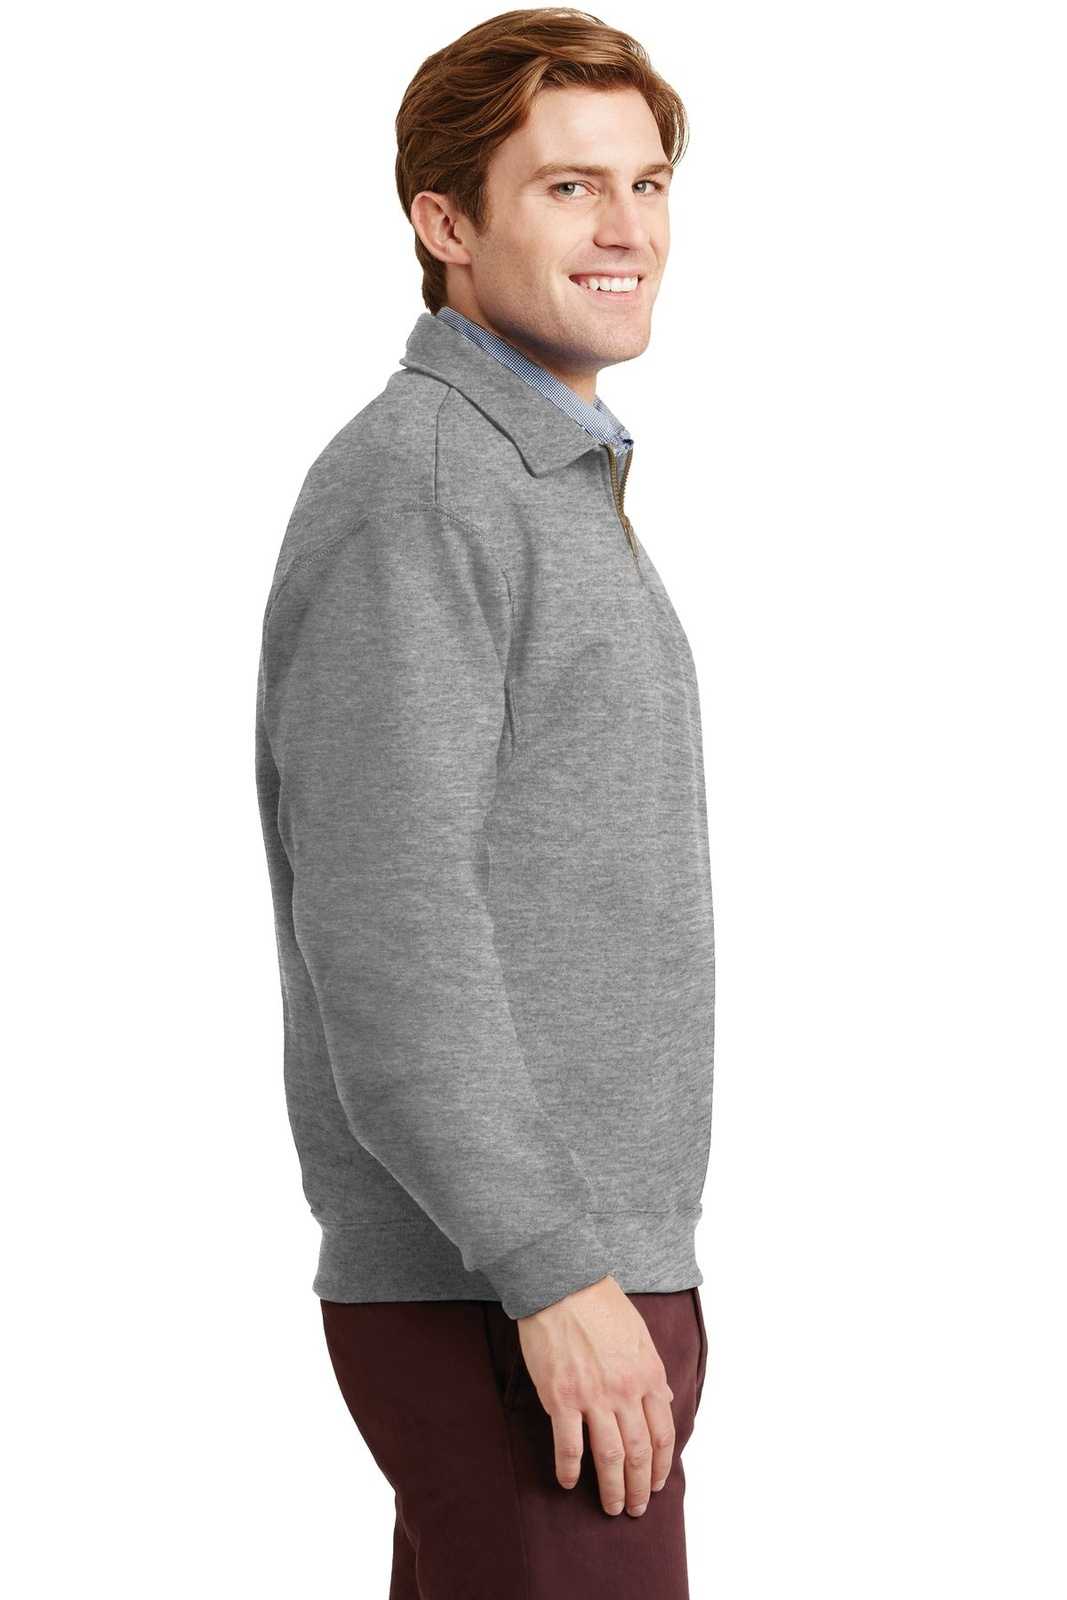 Jerzees 4528M Super Sweats Nublend 1/4-Zip Sweatshirt with Cadet Collar - Oxford - HIT a Double